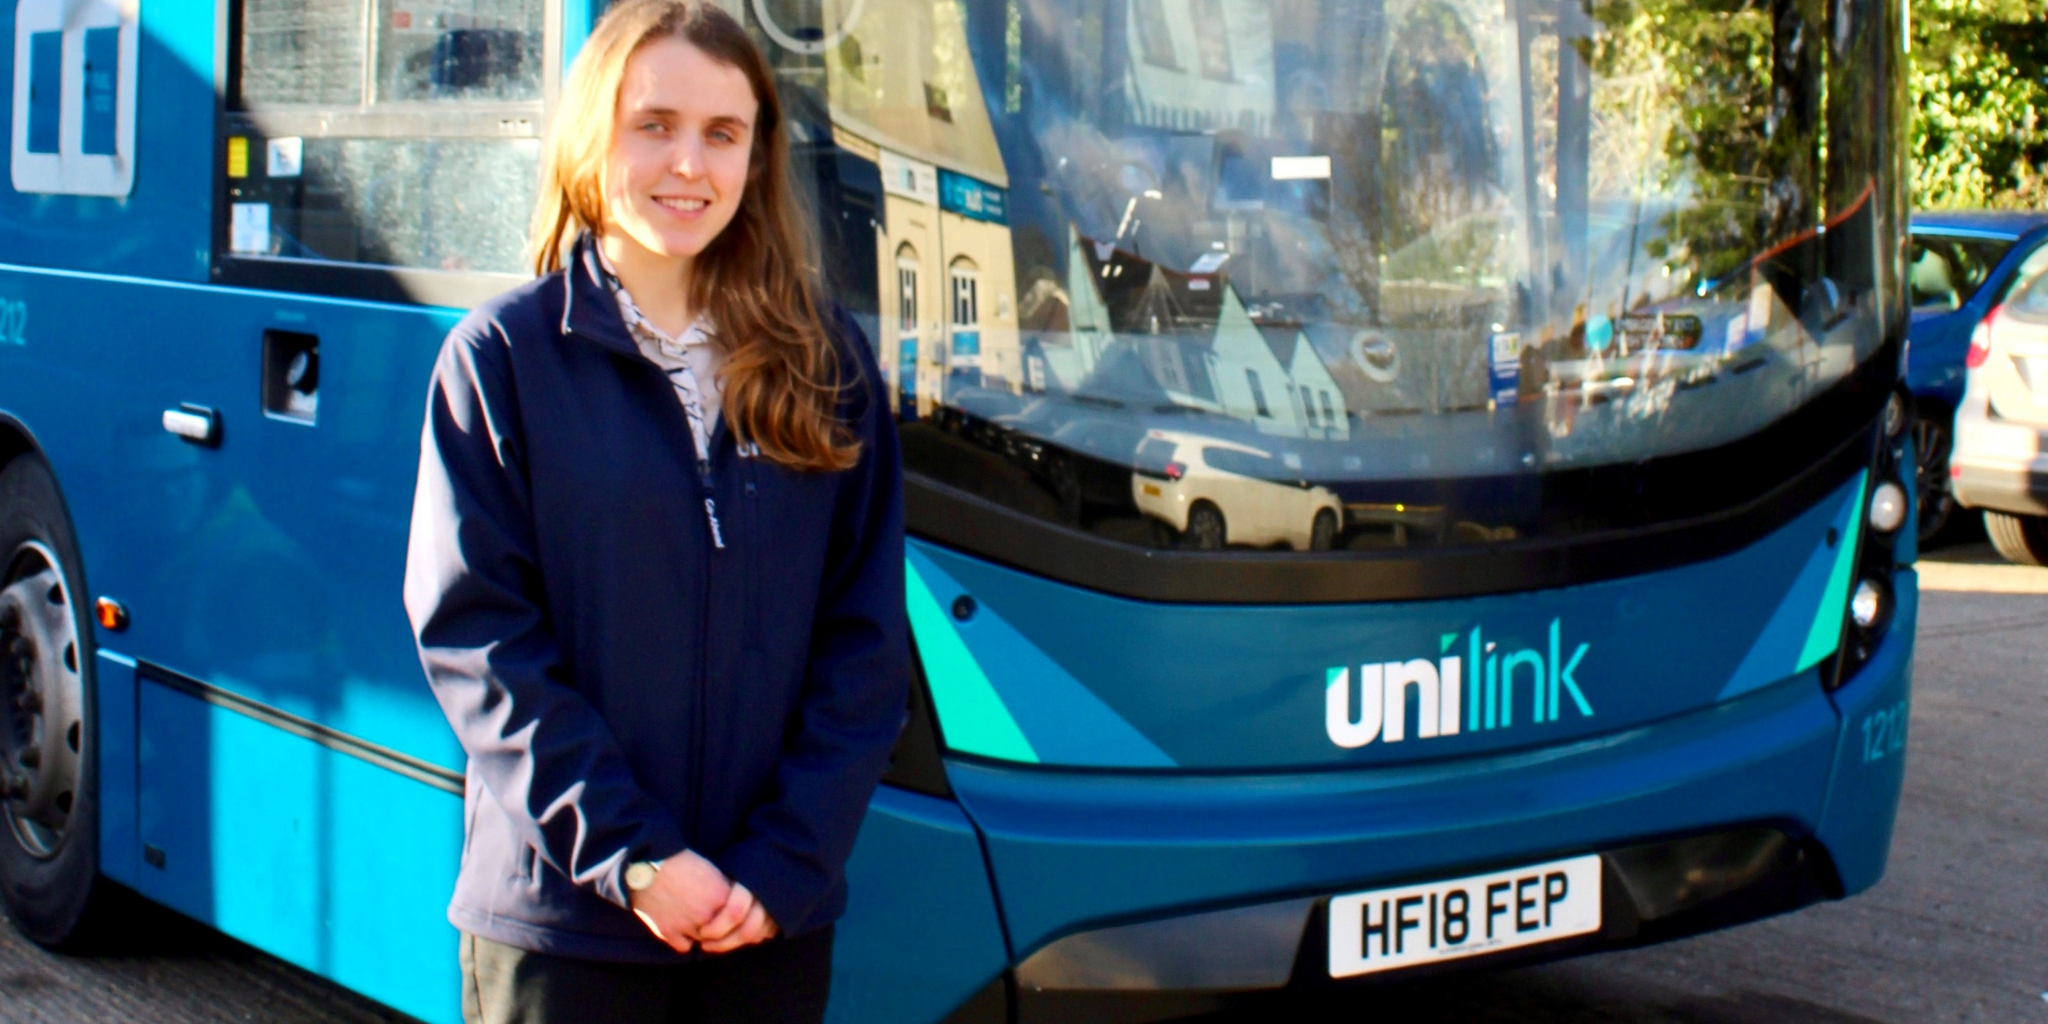 rachel with unilink bus